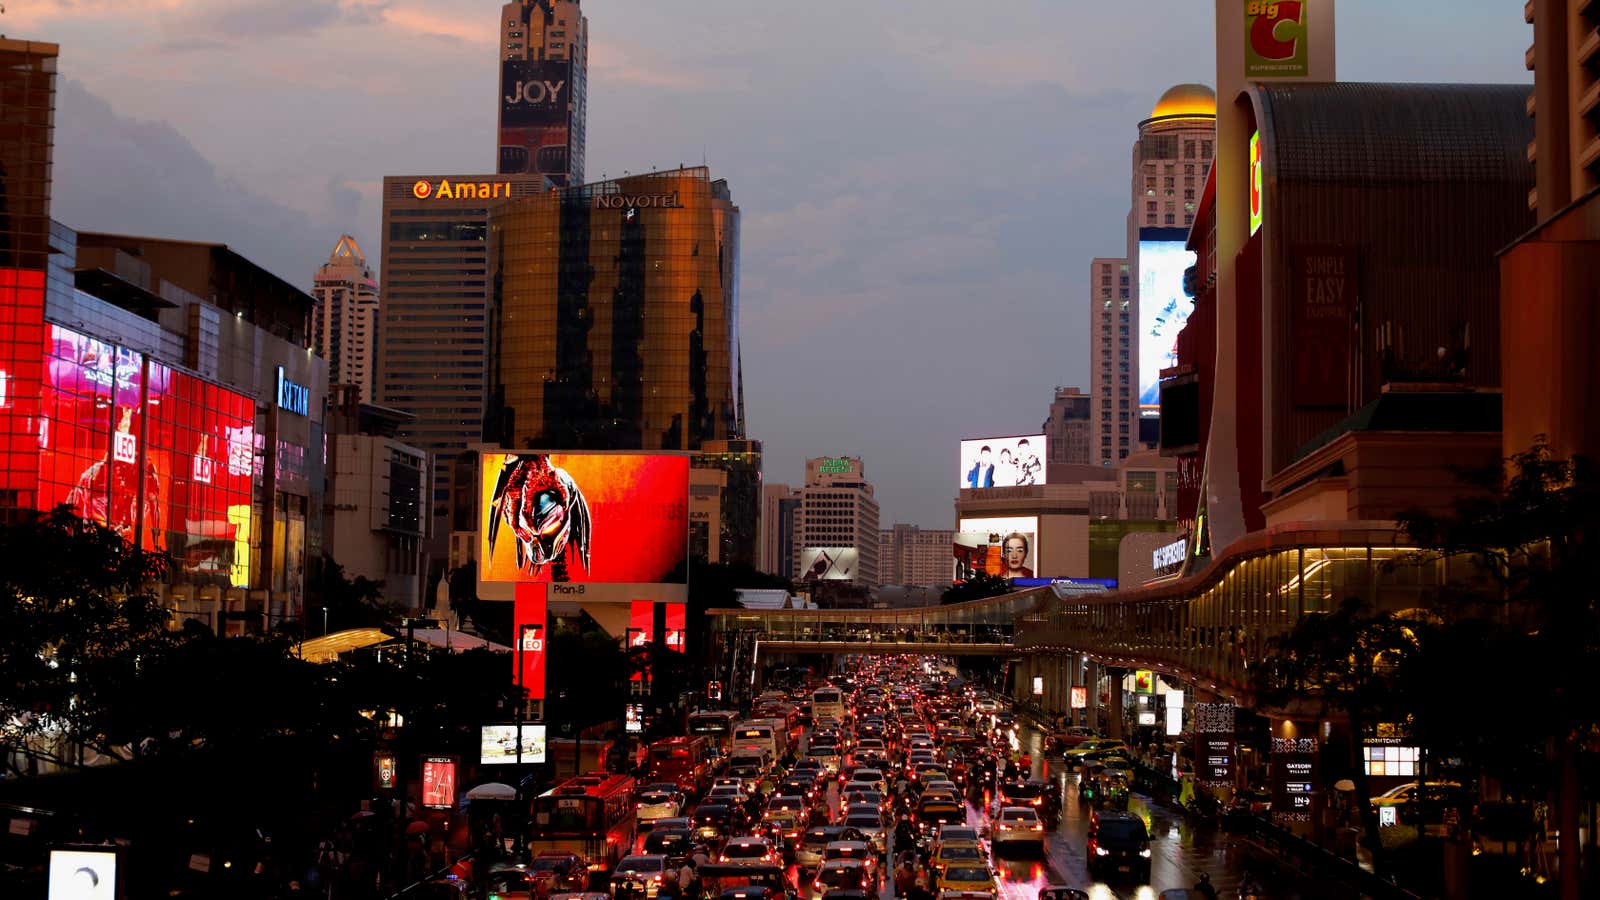 Electric vehicles would make Bangkok’s rush hour a bit less noxious.